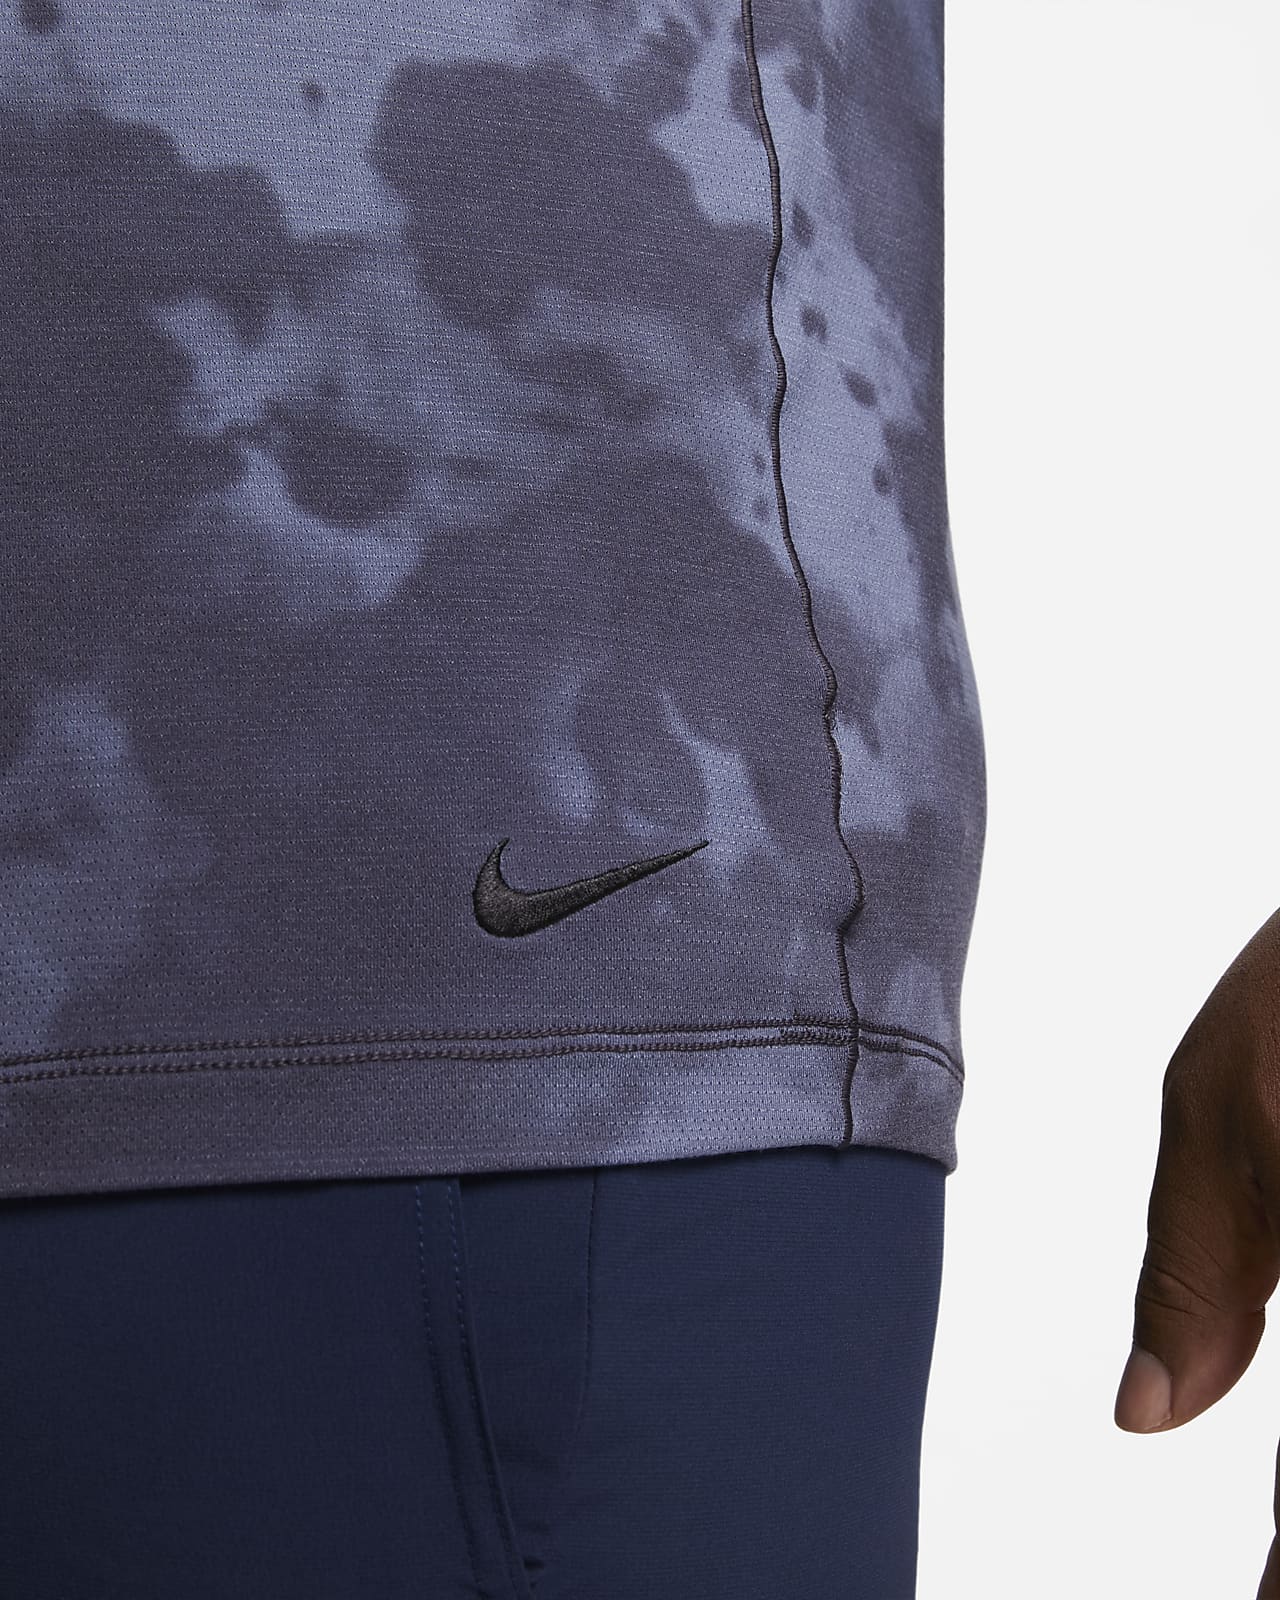 Nike Dri-FIT Men's Allover Print Short-Sleeve Yoga Top.